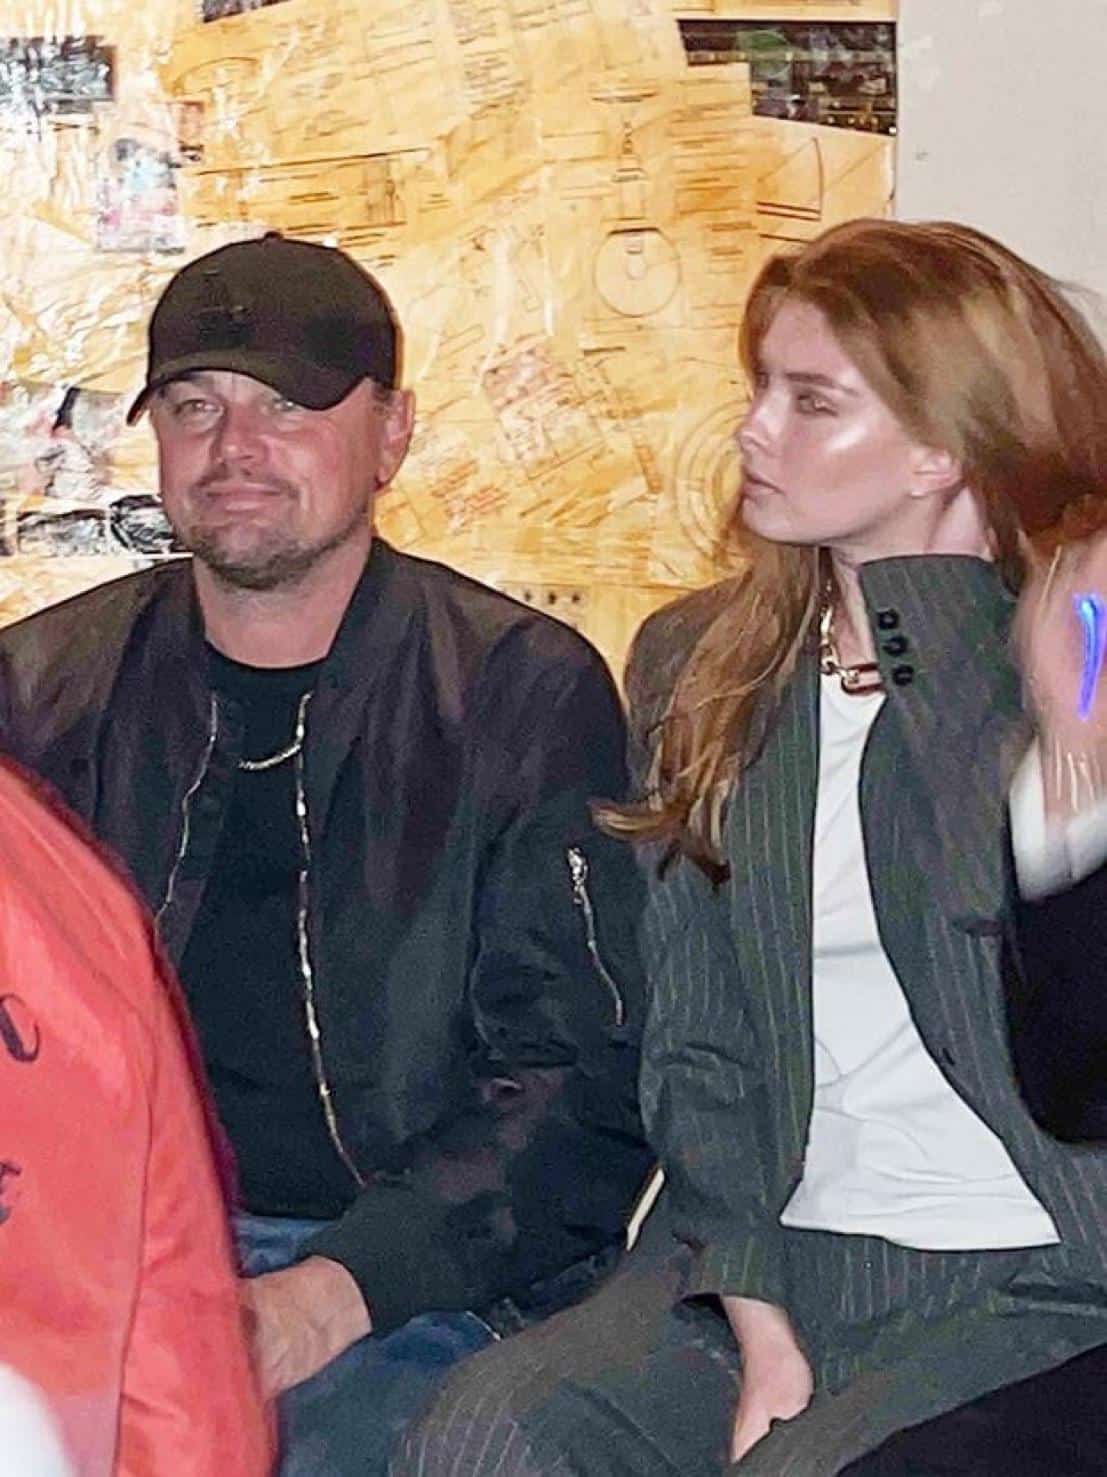 Leonardo DiCaprio and Eden Polani